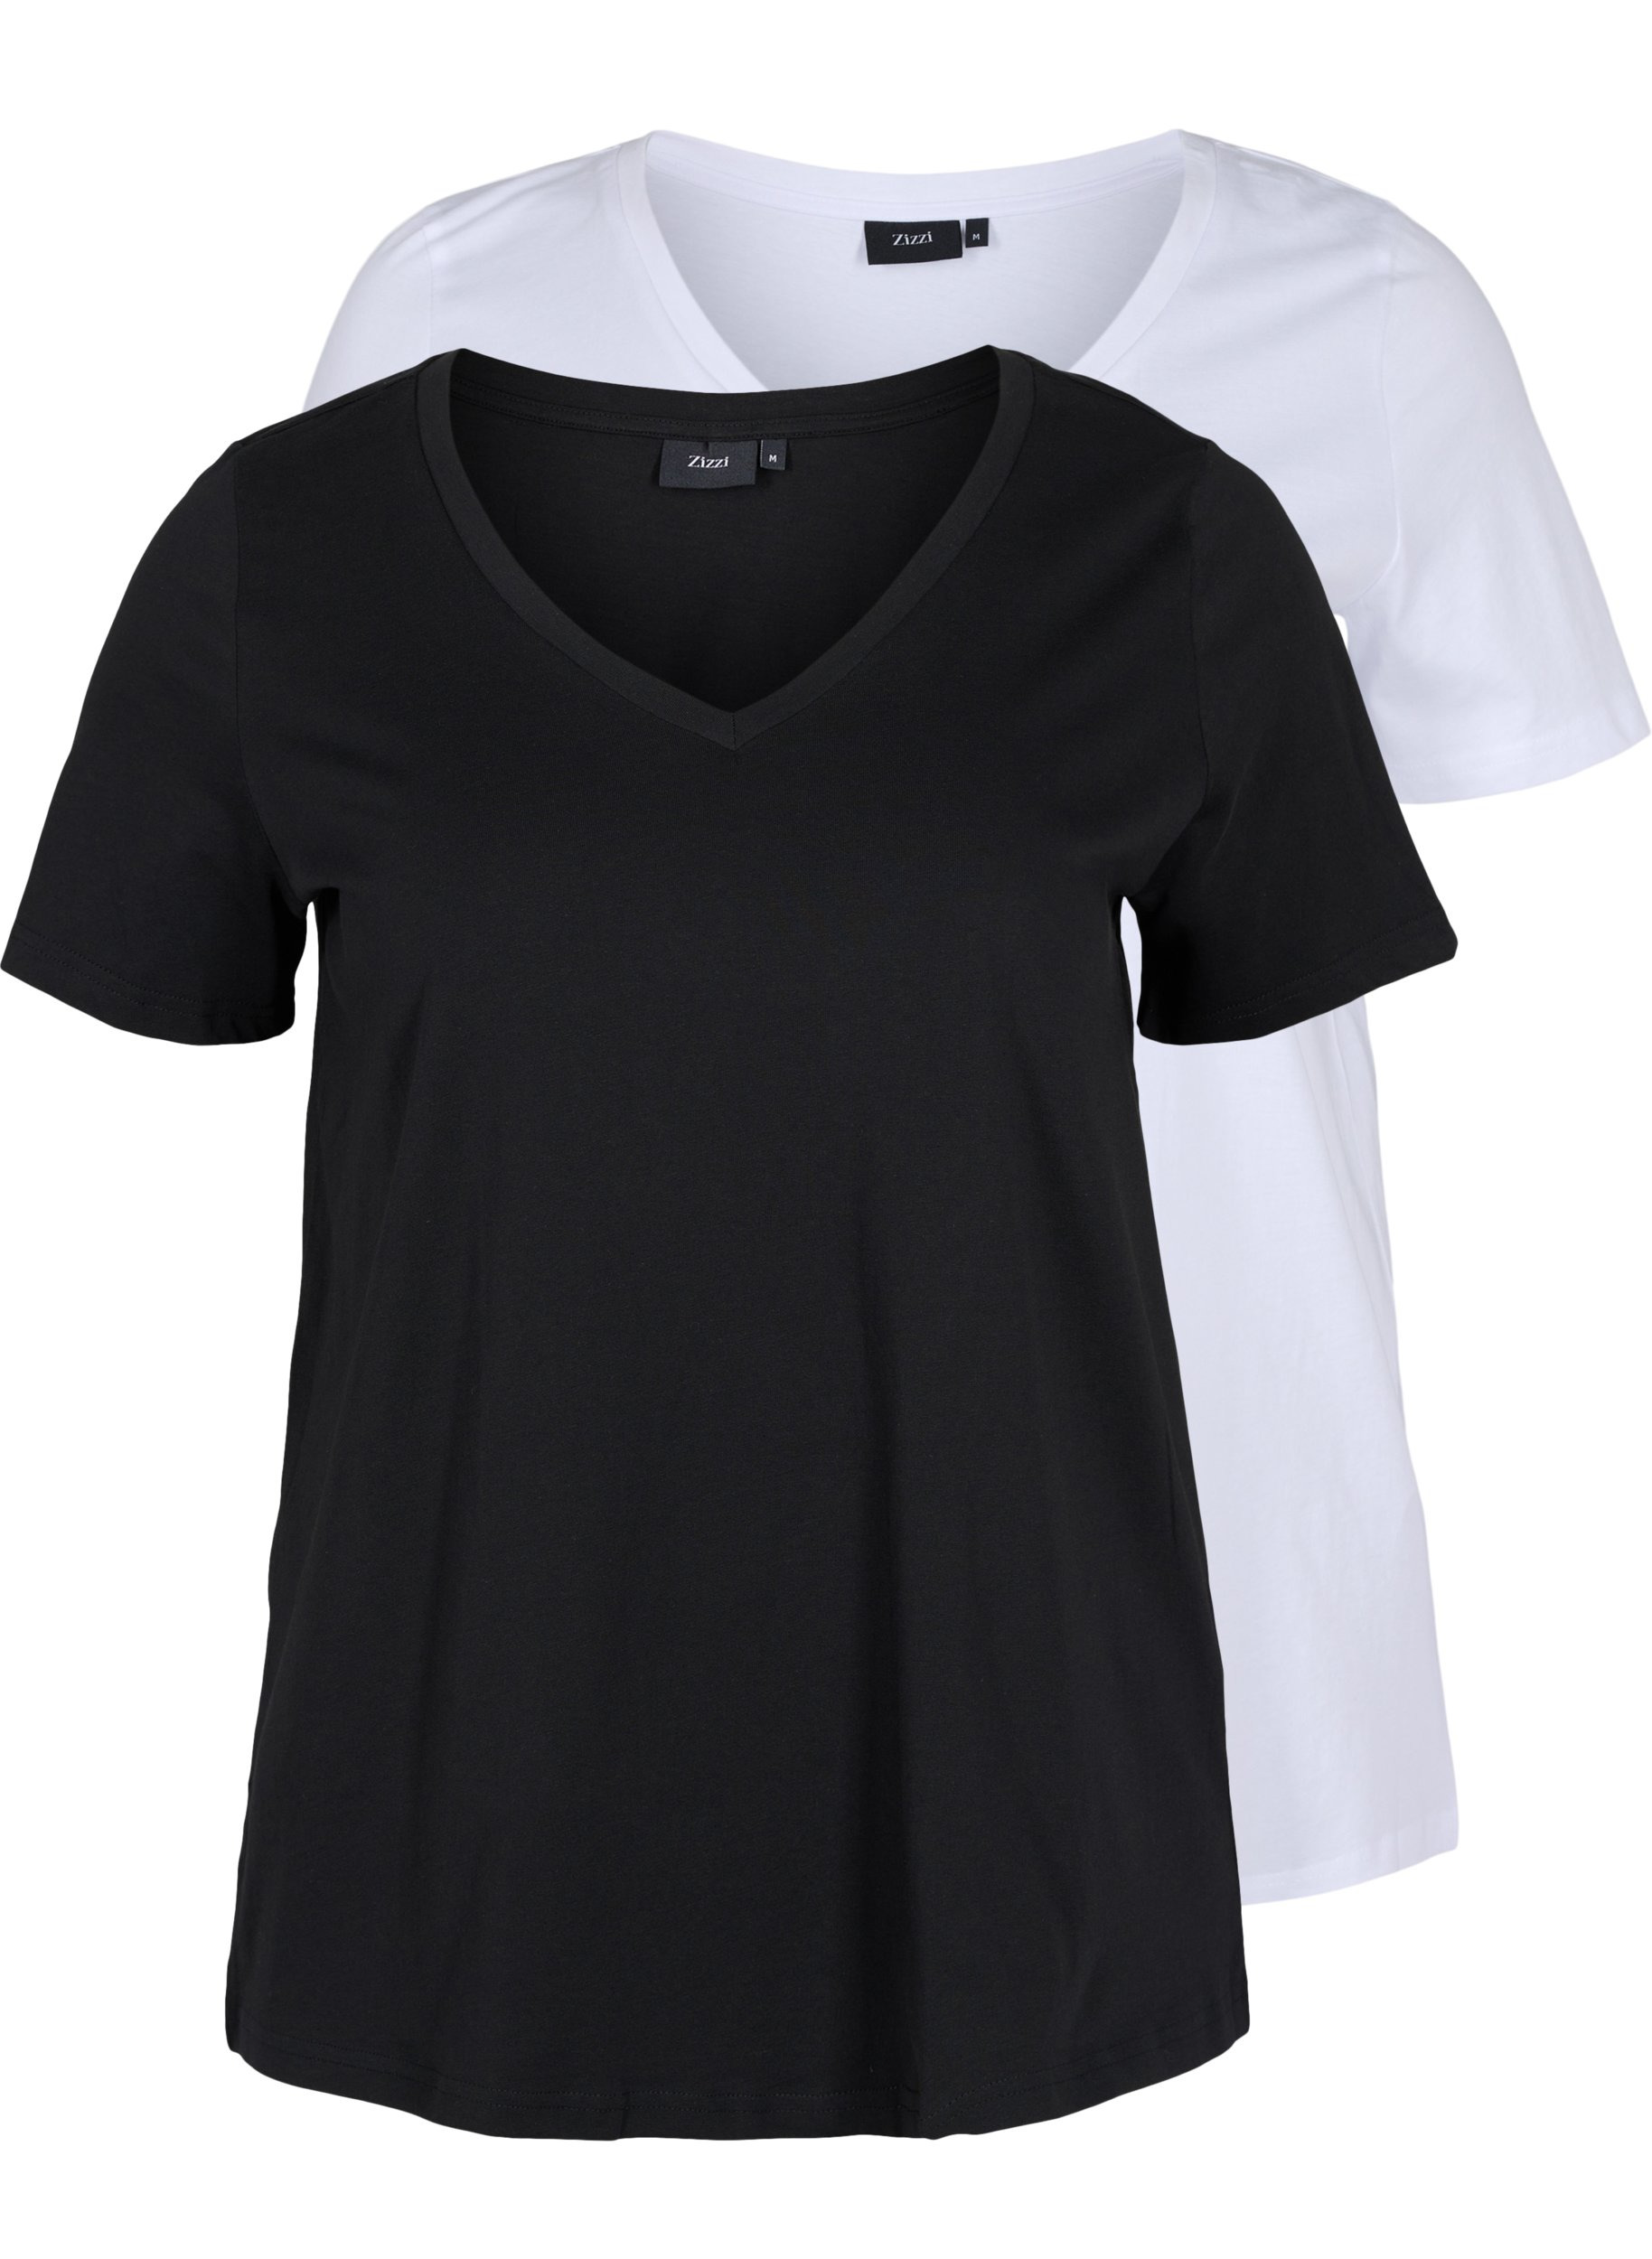 2er-Pack basic T-Shirts aus Baumwolle, Black/Bright W, Packshot